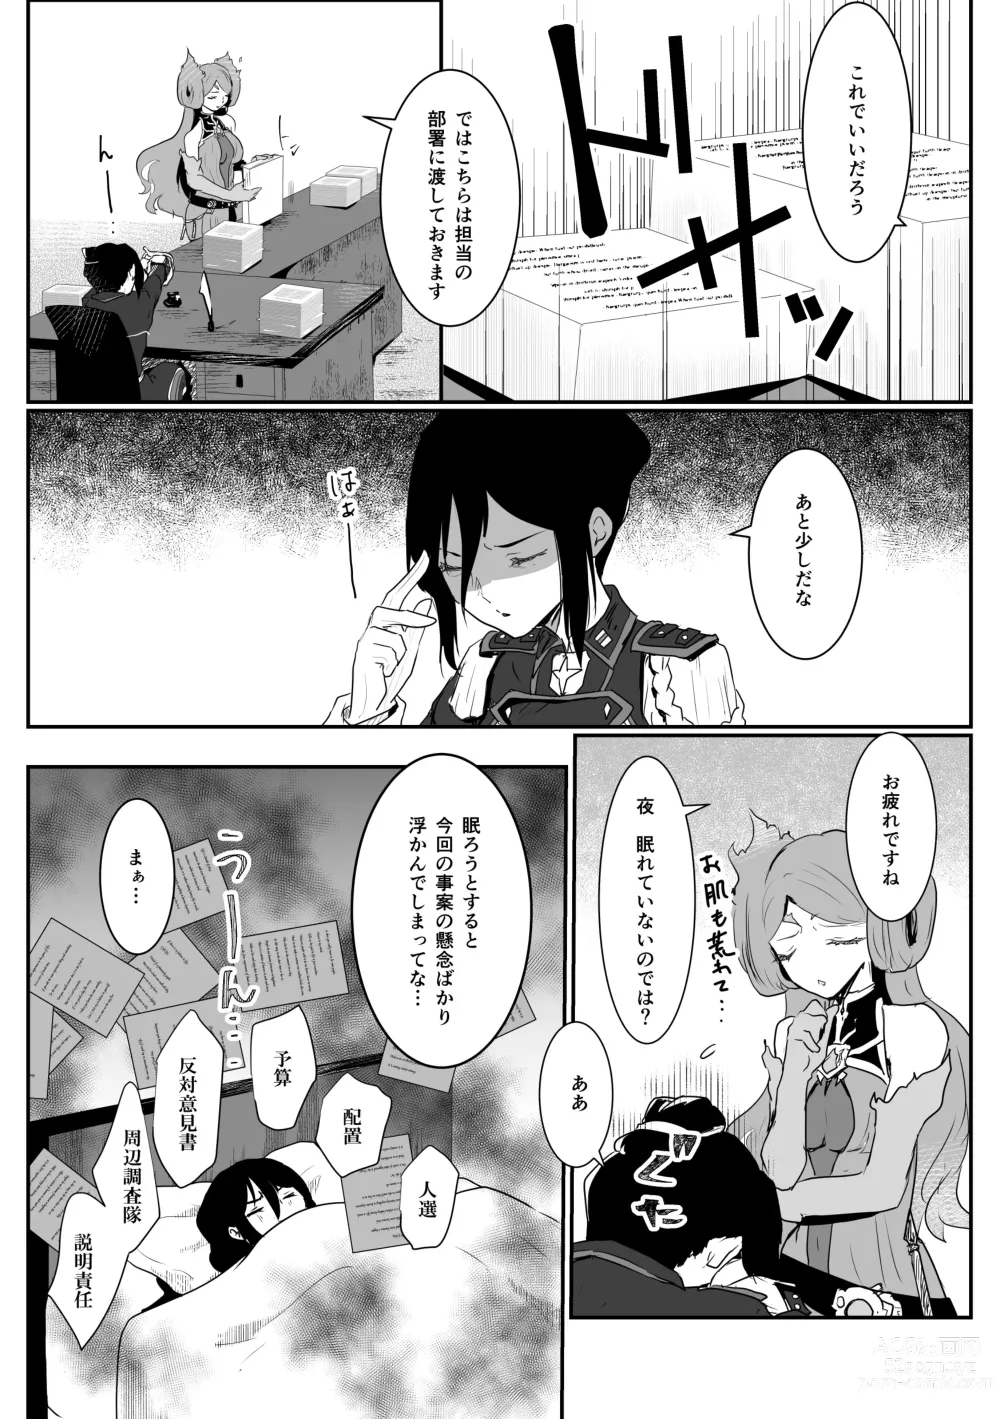 Page 19 of doujinshi Jikumere Ecchi Manga Matome